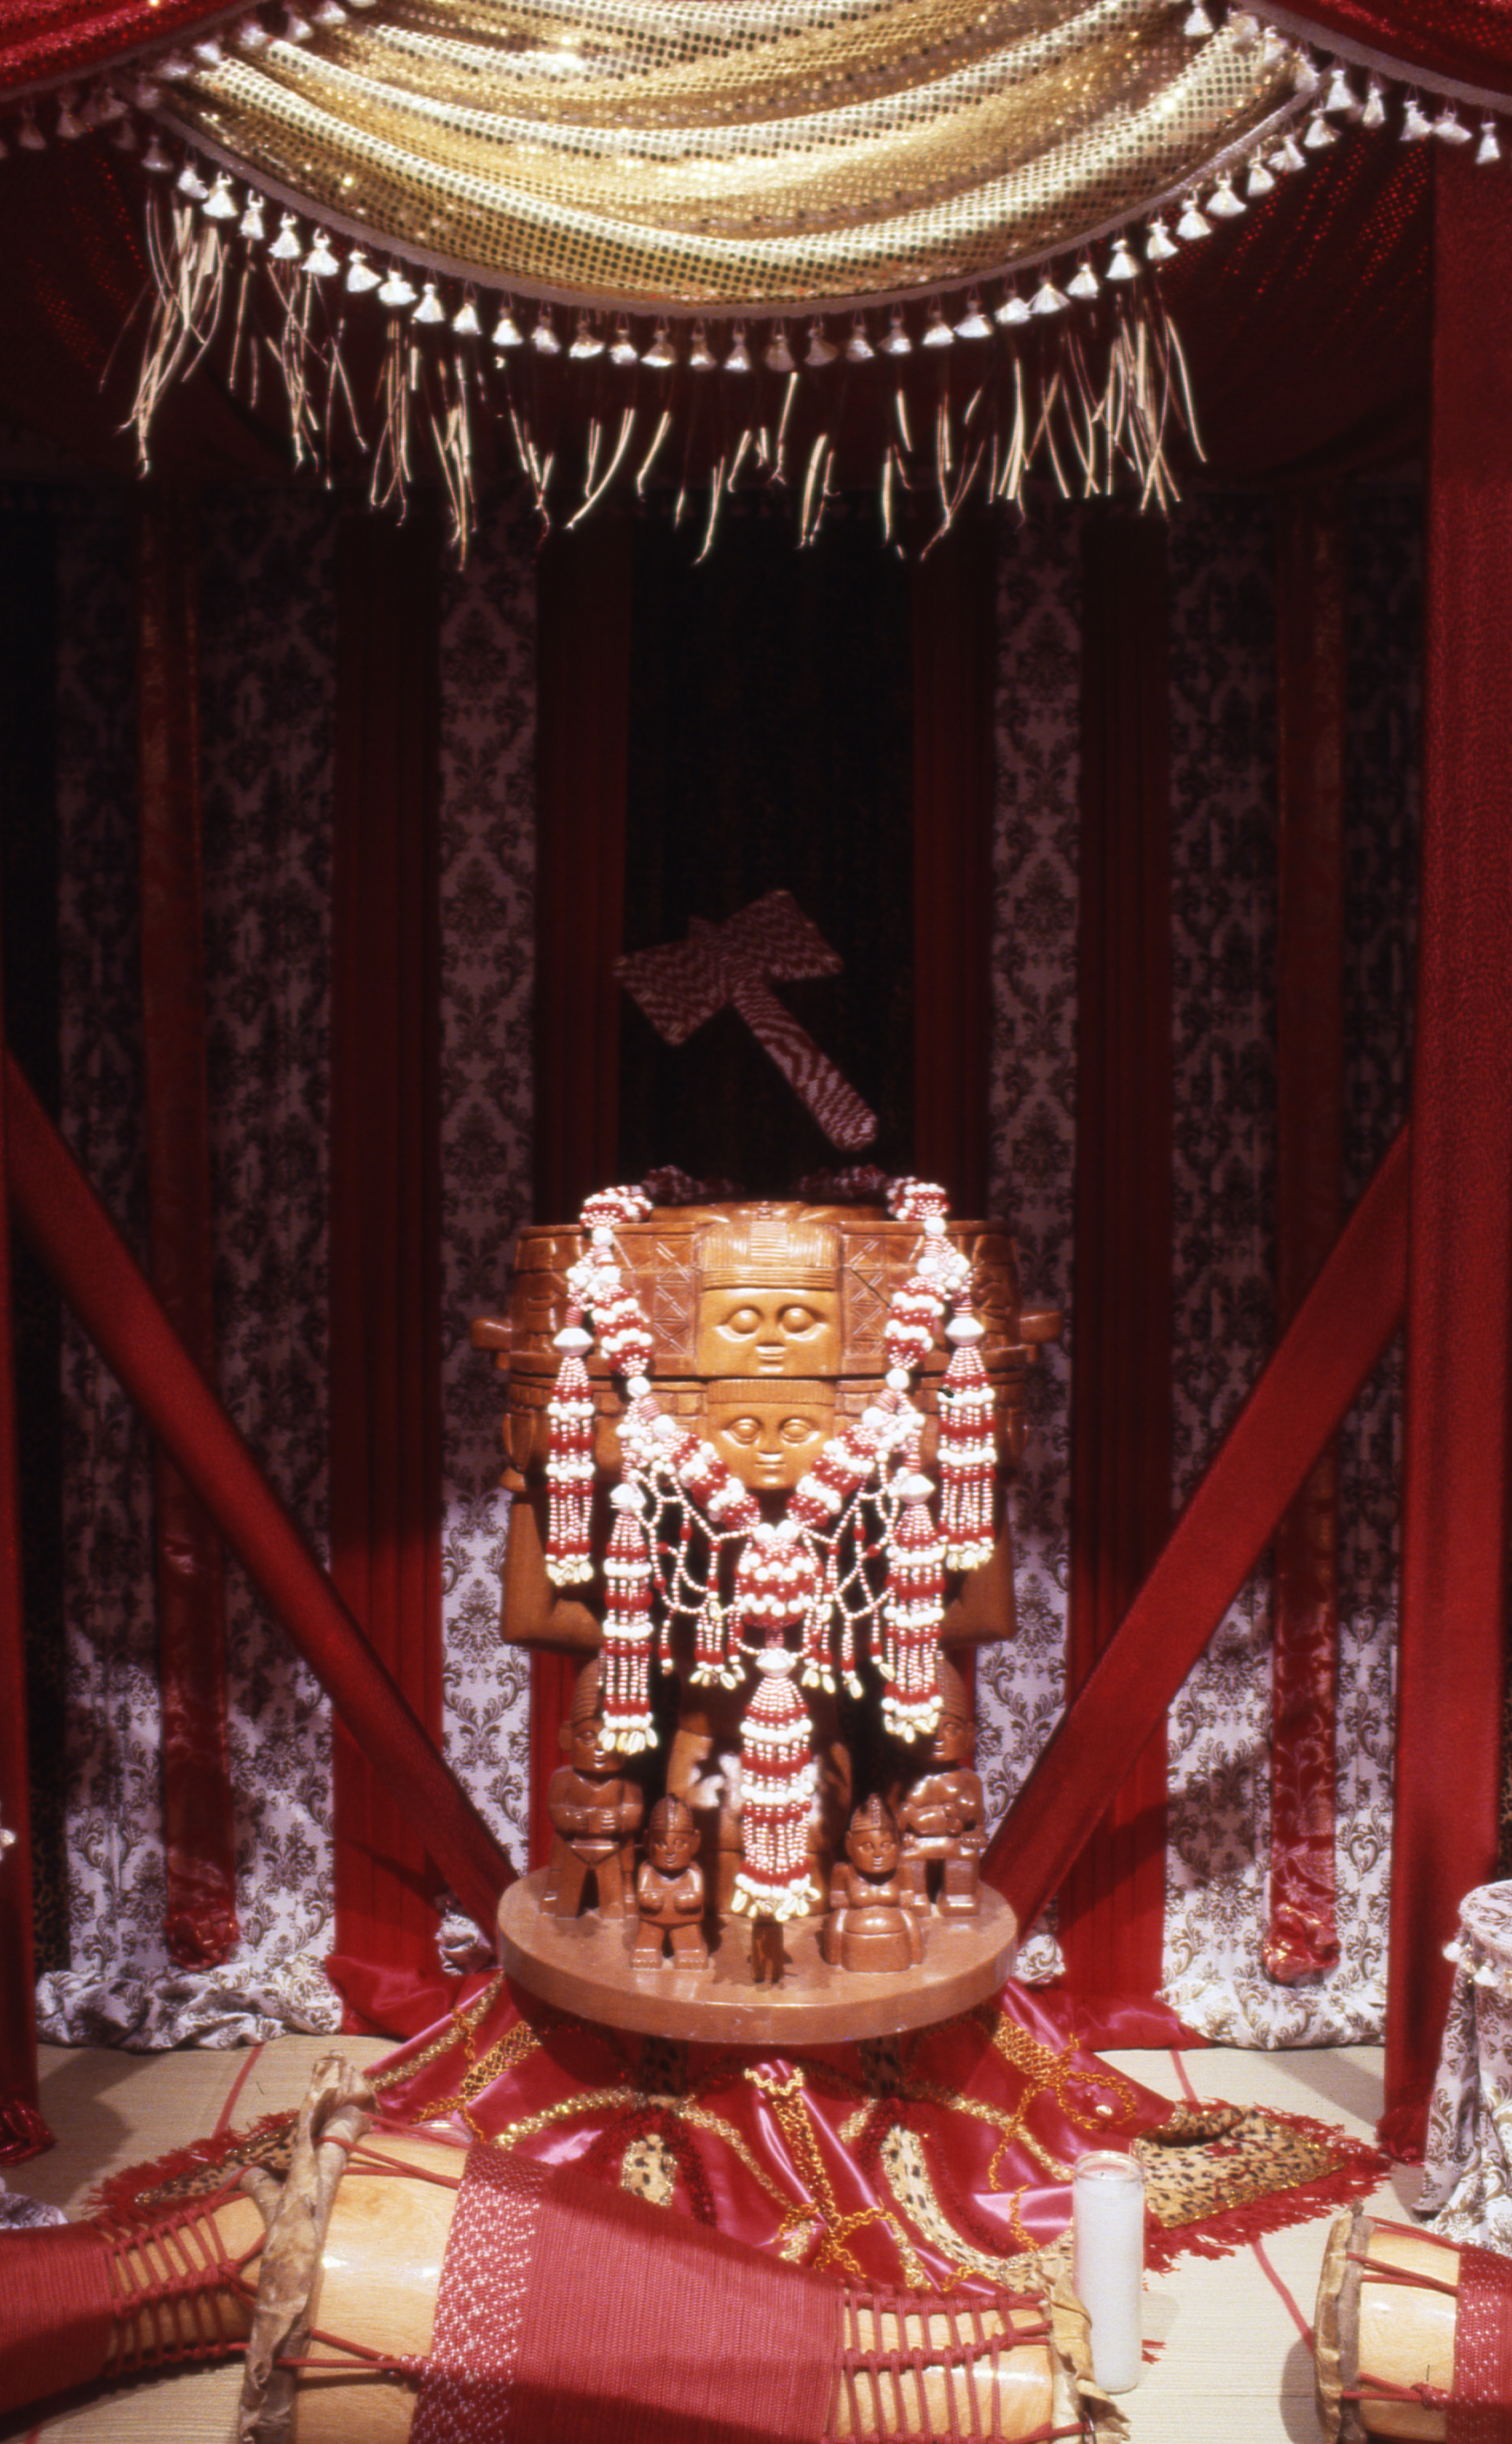 Ritual throne for Shangó